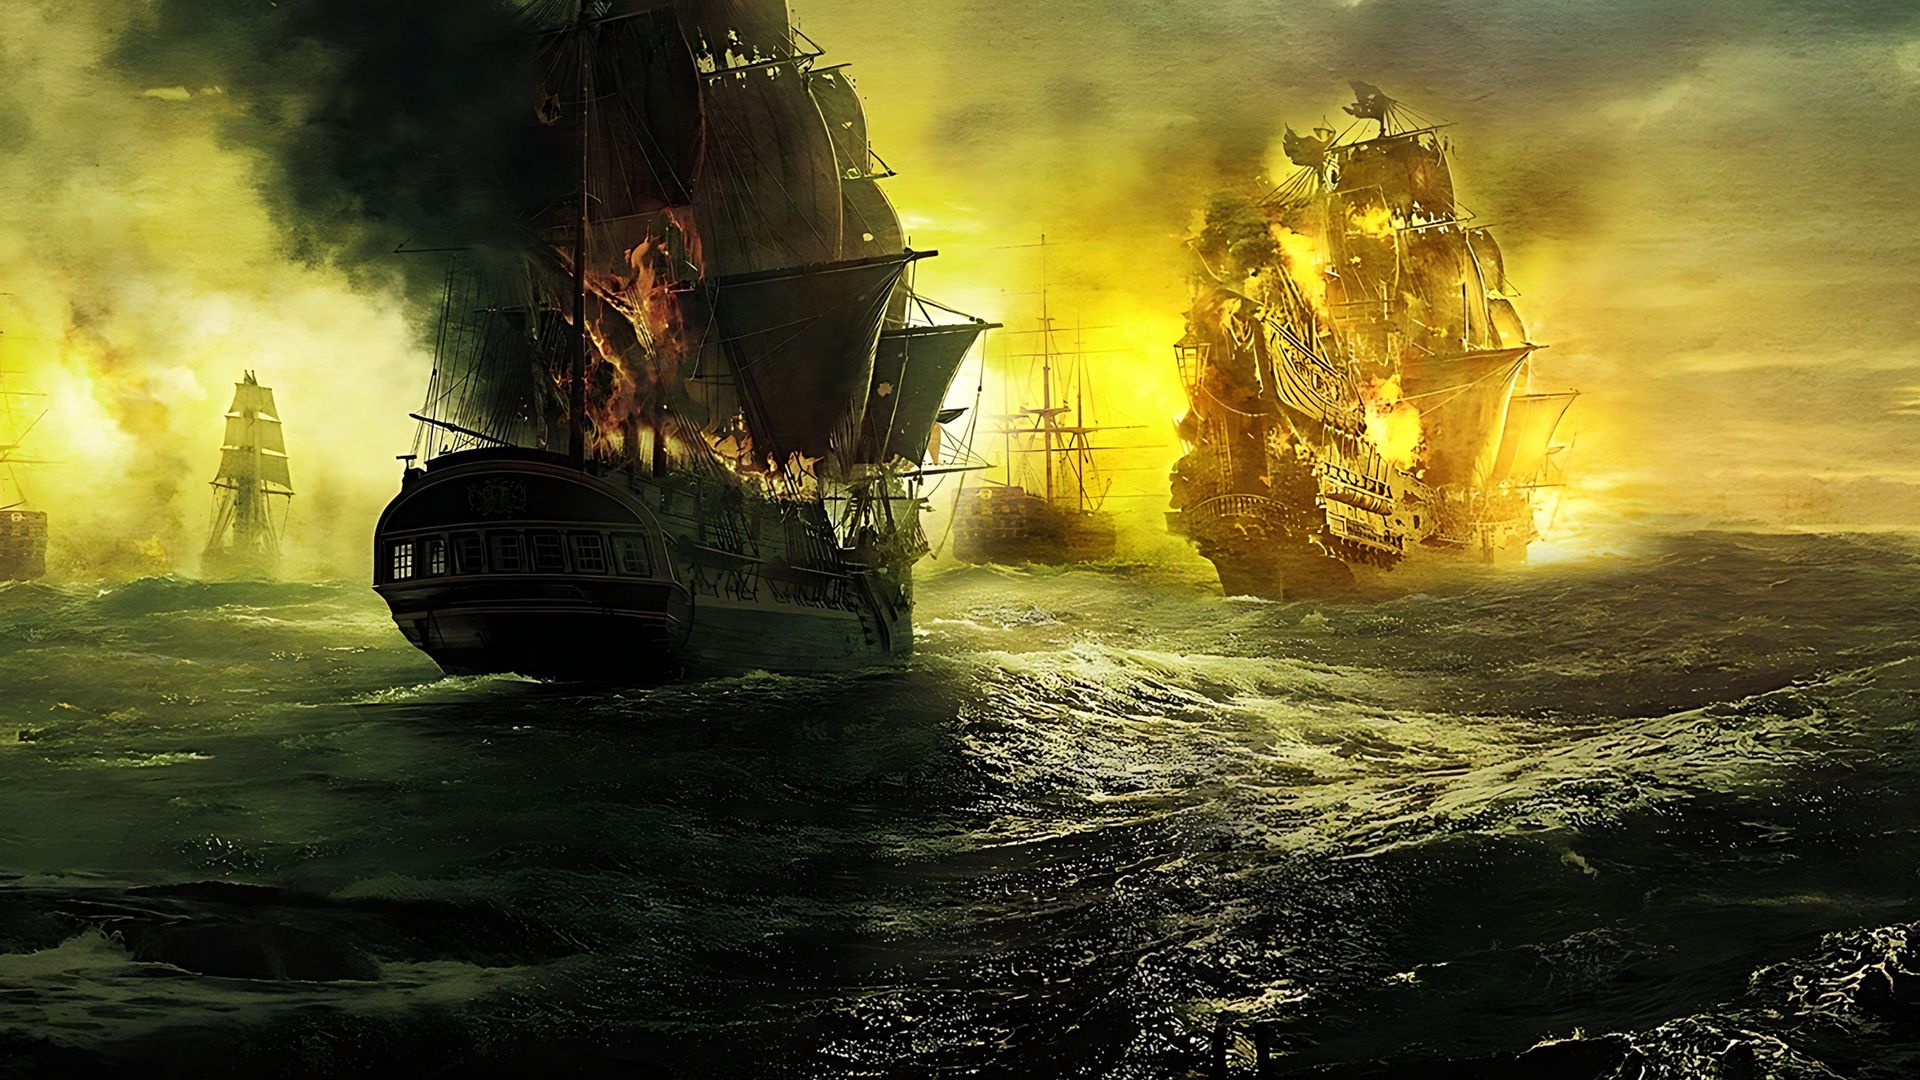 Trafalgar: The Greatest Battle in Naval History